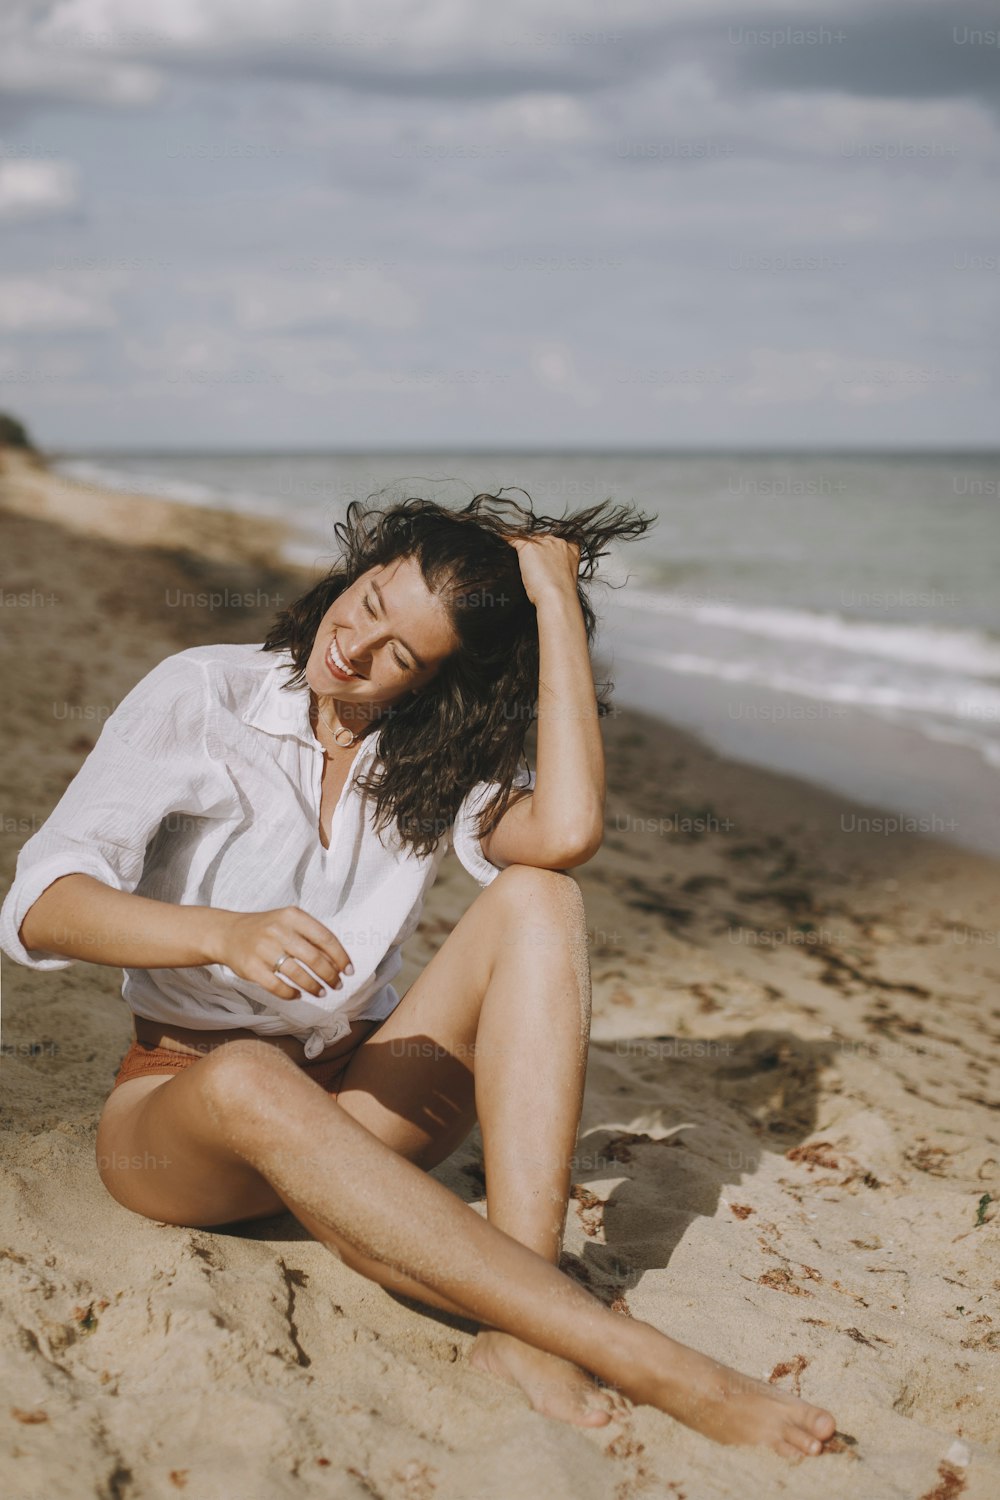 Joyful boho girl in white shirt sitting on sunny beach. Carefree stylish woman smiling and relaxing on seashore. Summer vacation. Lifestyle authentic image. Mindfulness